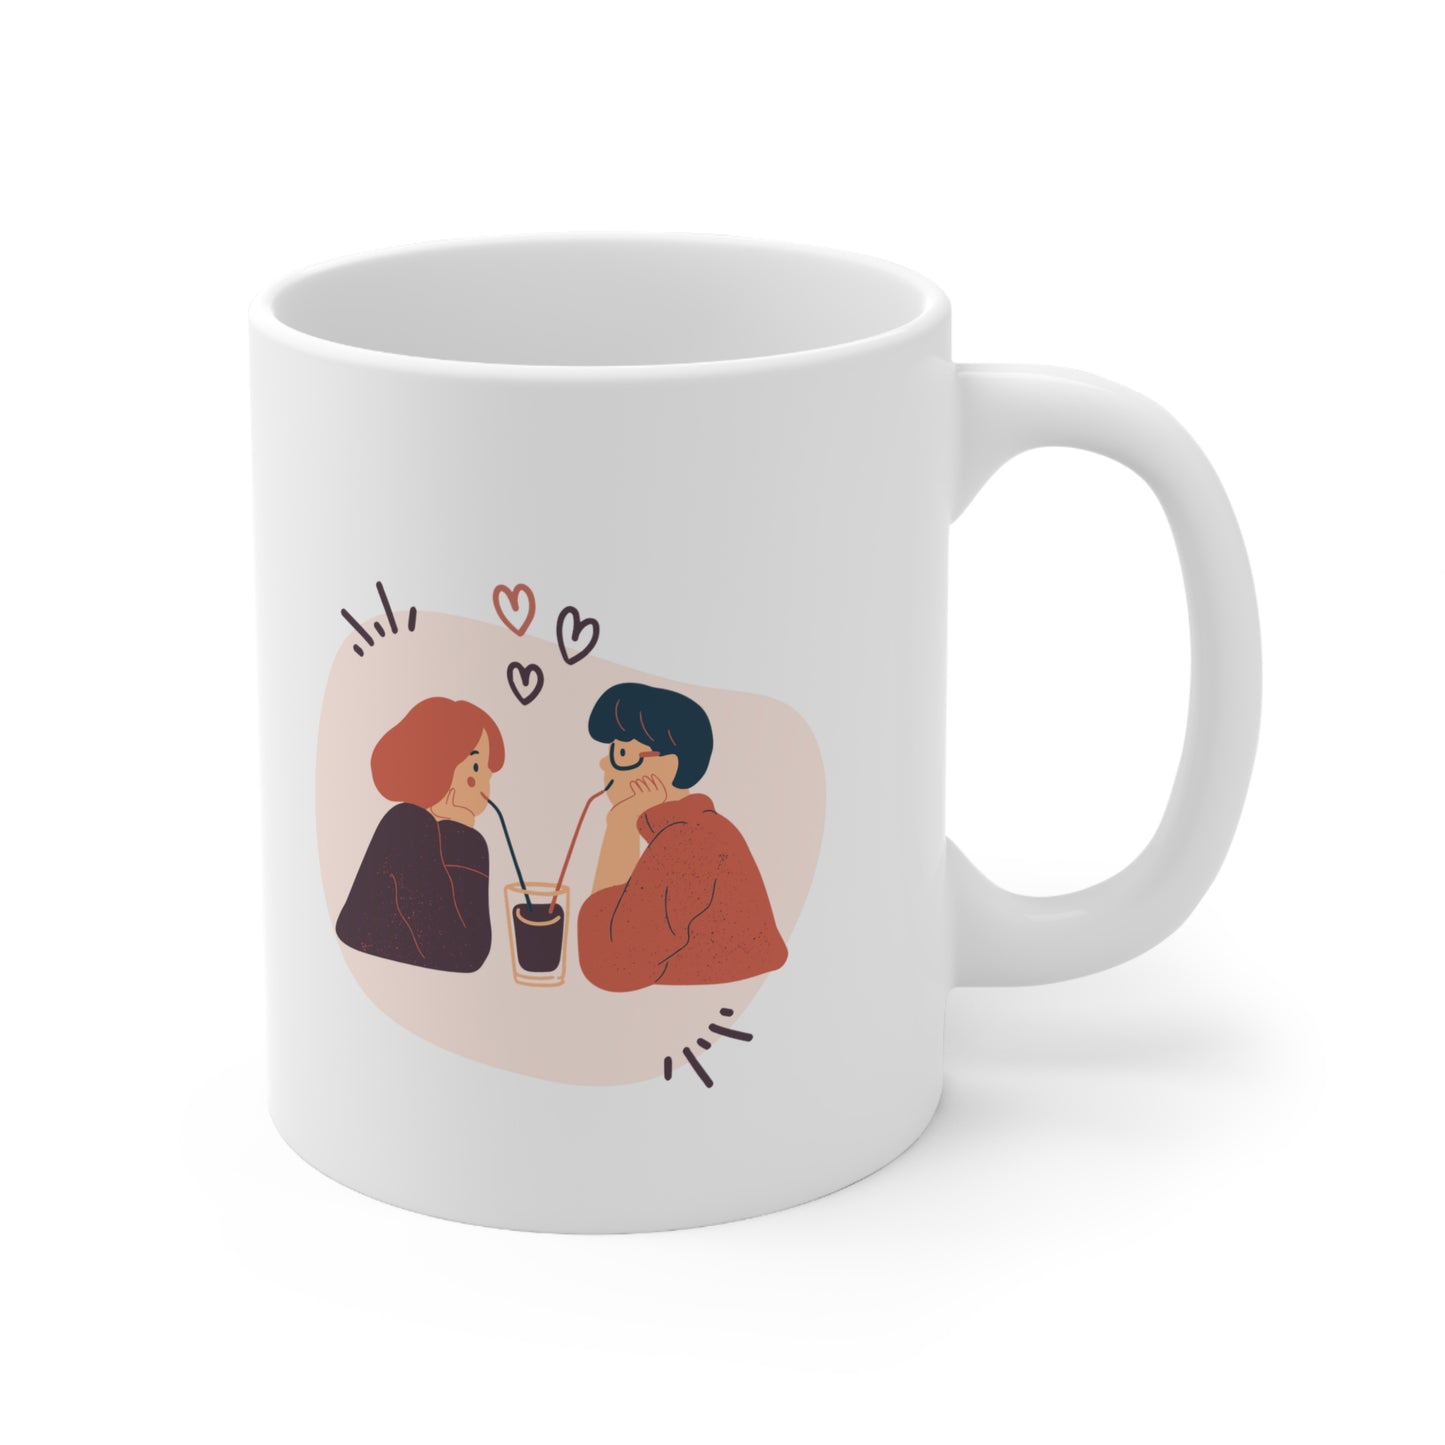 Couple on Cycle Printed Valentine Ceramic Mugs, 11oz